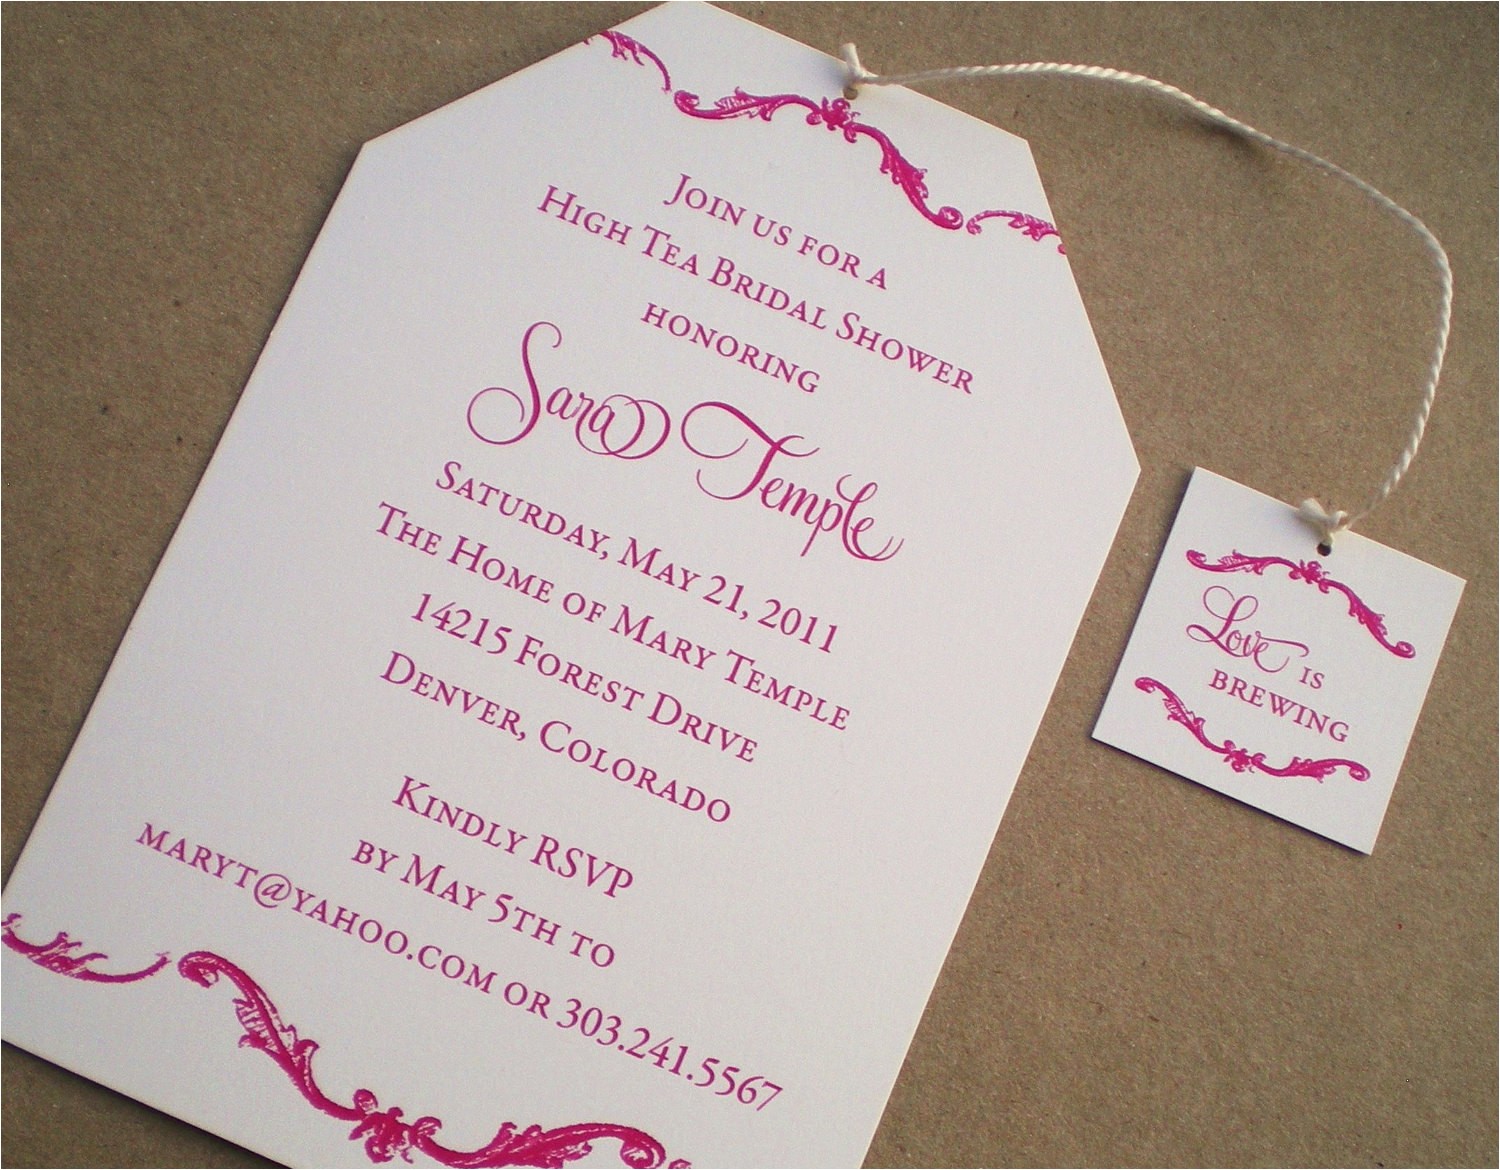 high tea bridal shower invitations